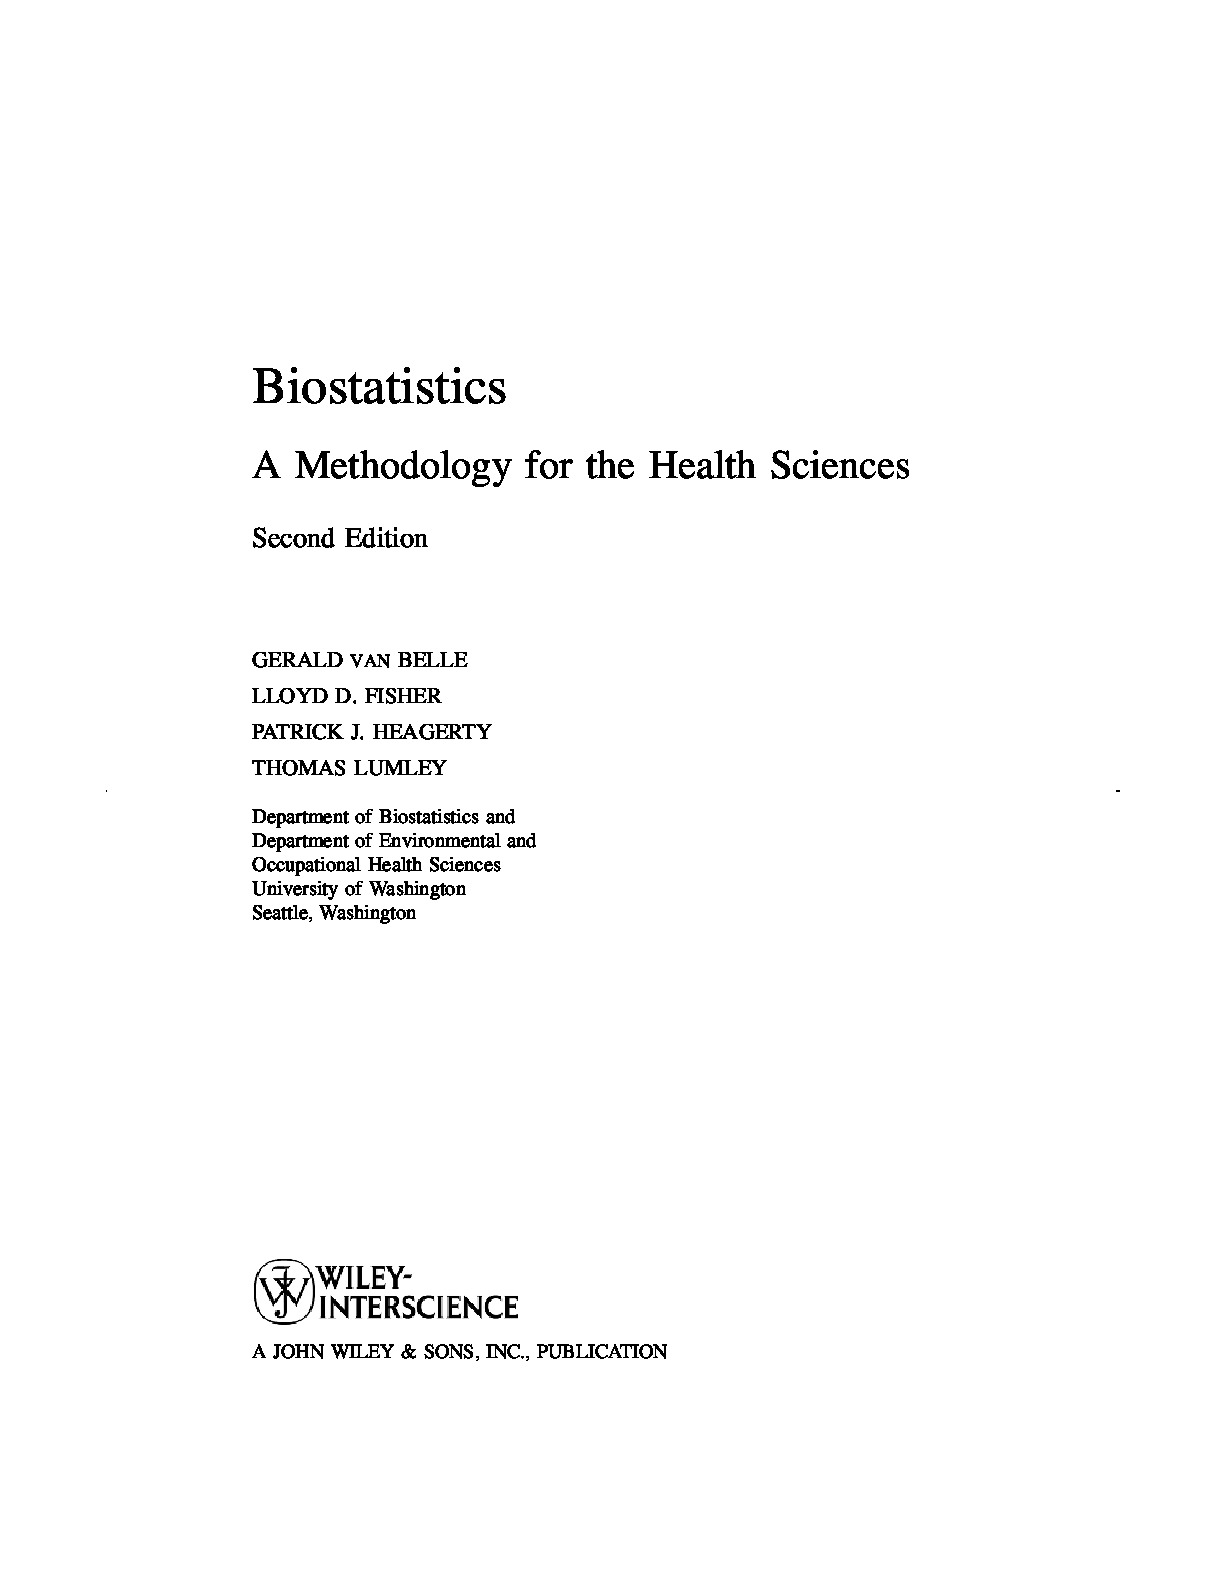 Introduction_to_Biostatistics